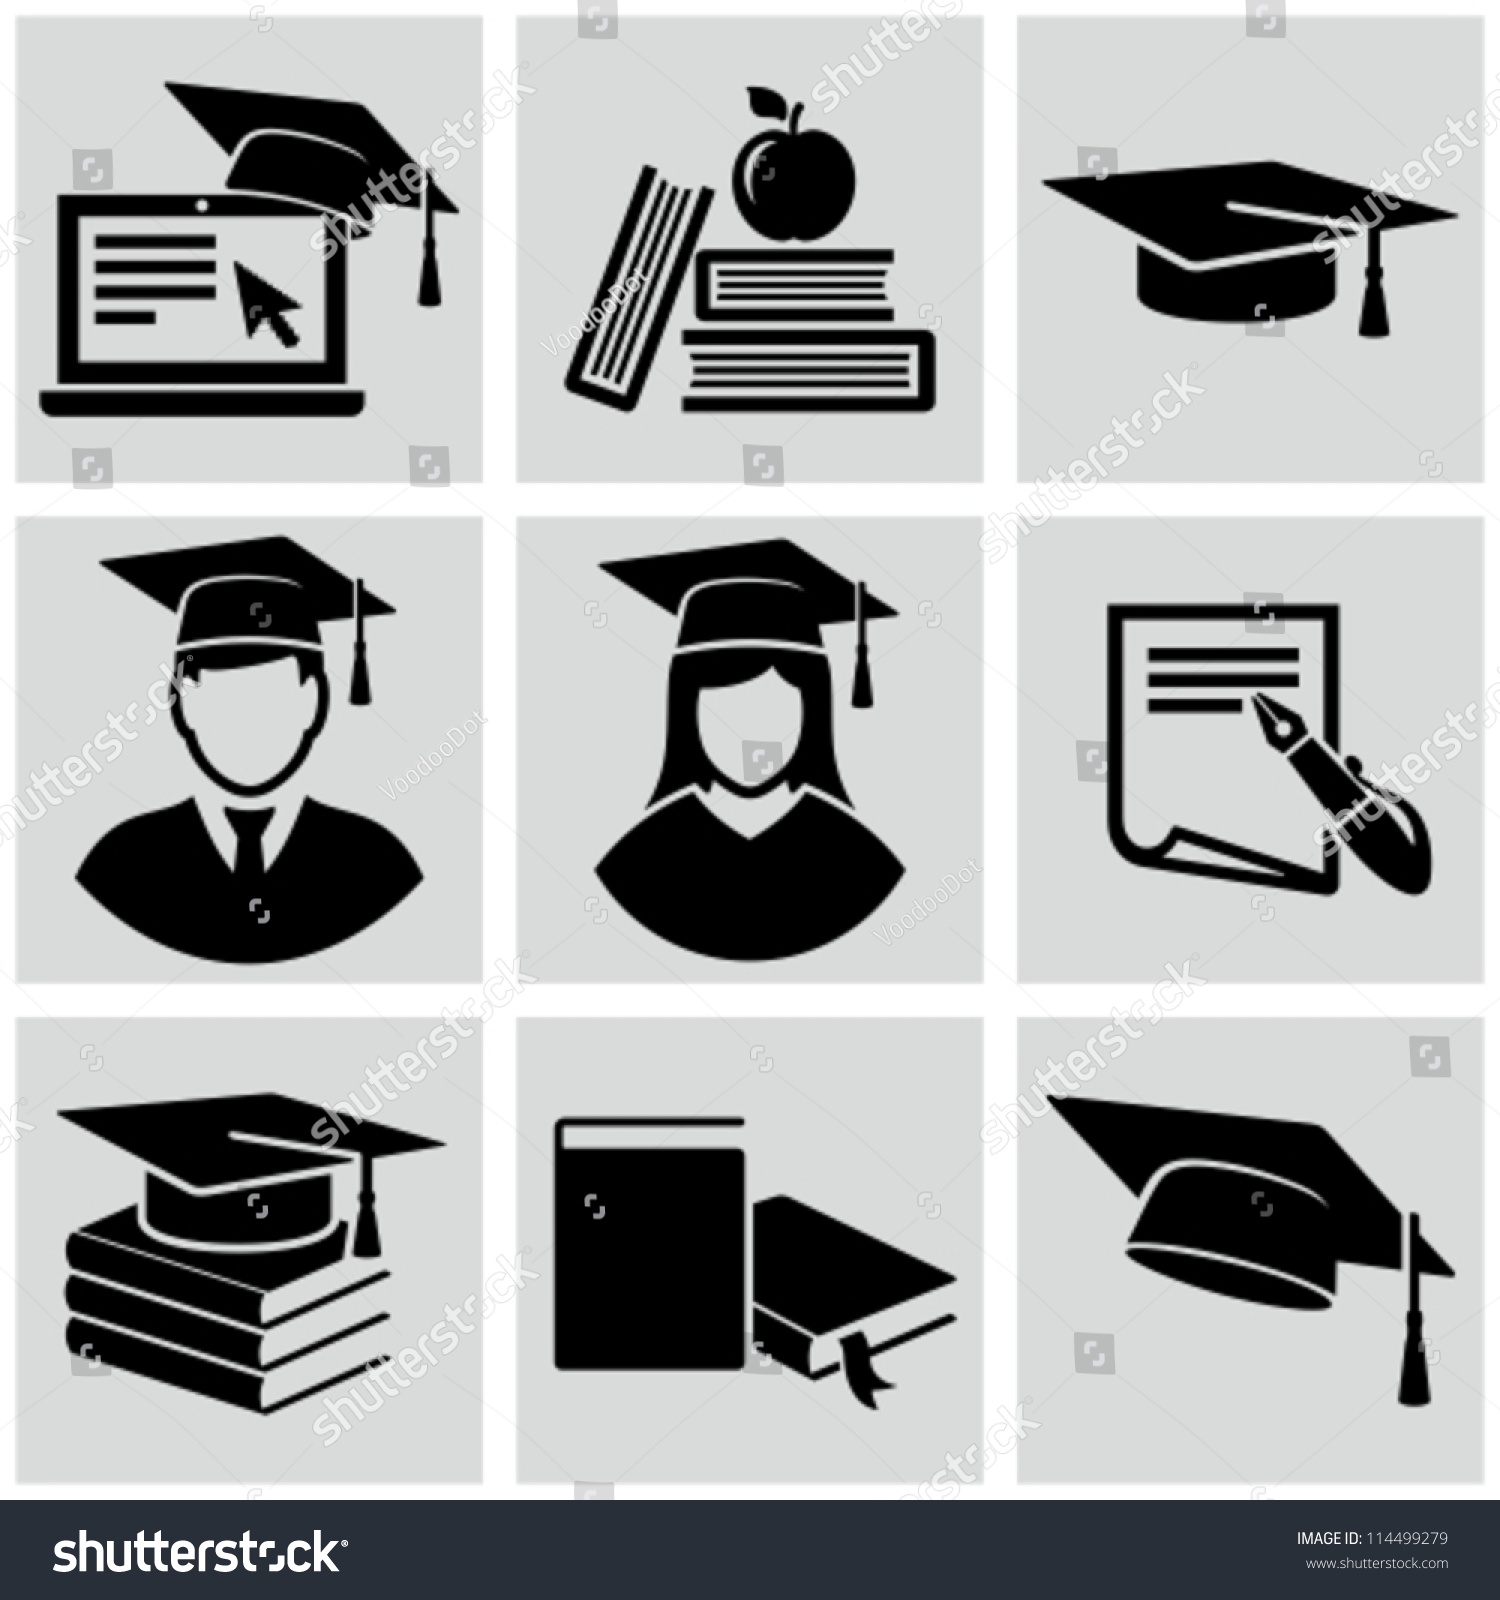 Education Icons Set. Stock Vector Illustration 114499279 : Shutterstock